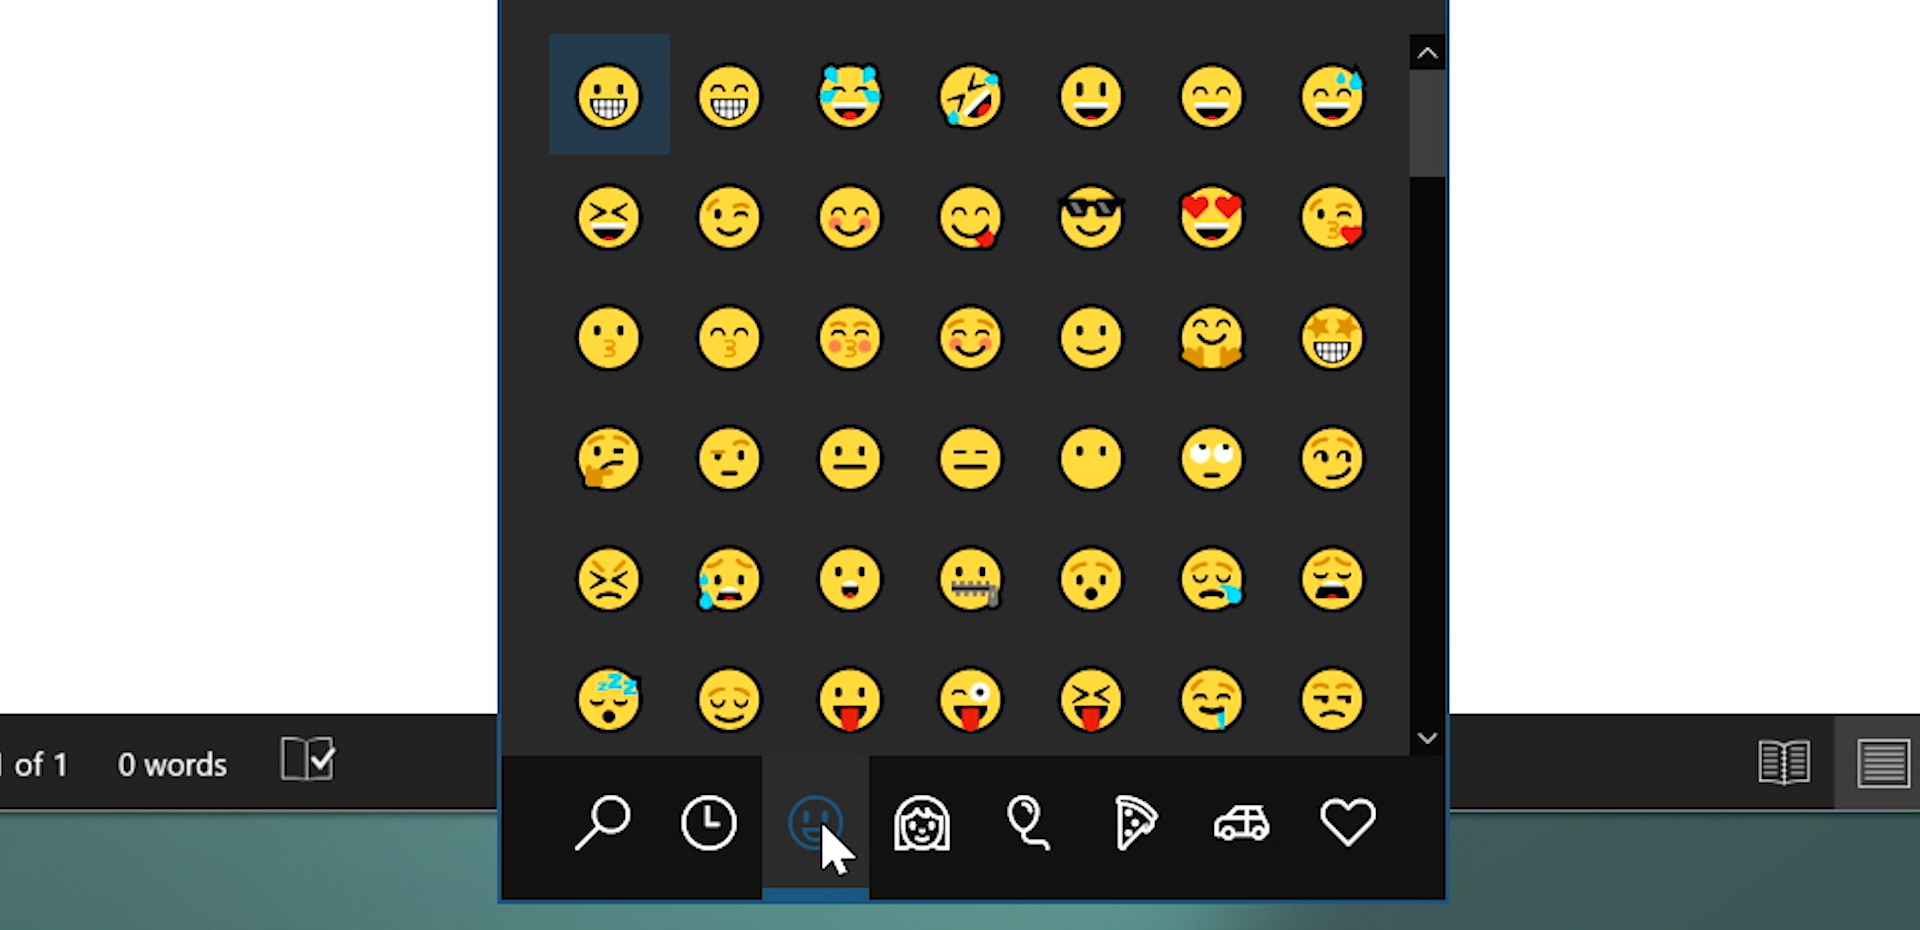 Windows 10 Tip Get started with the emoji keyboard shortcut Windows